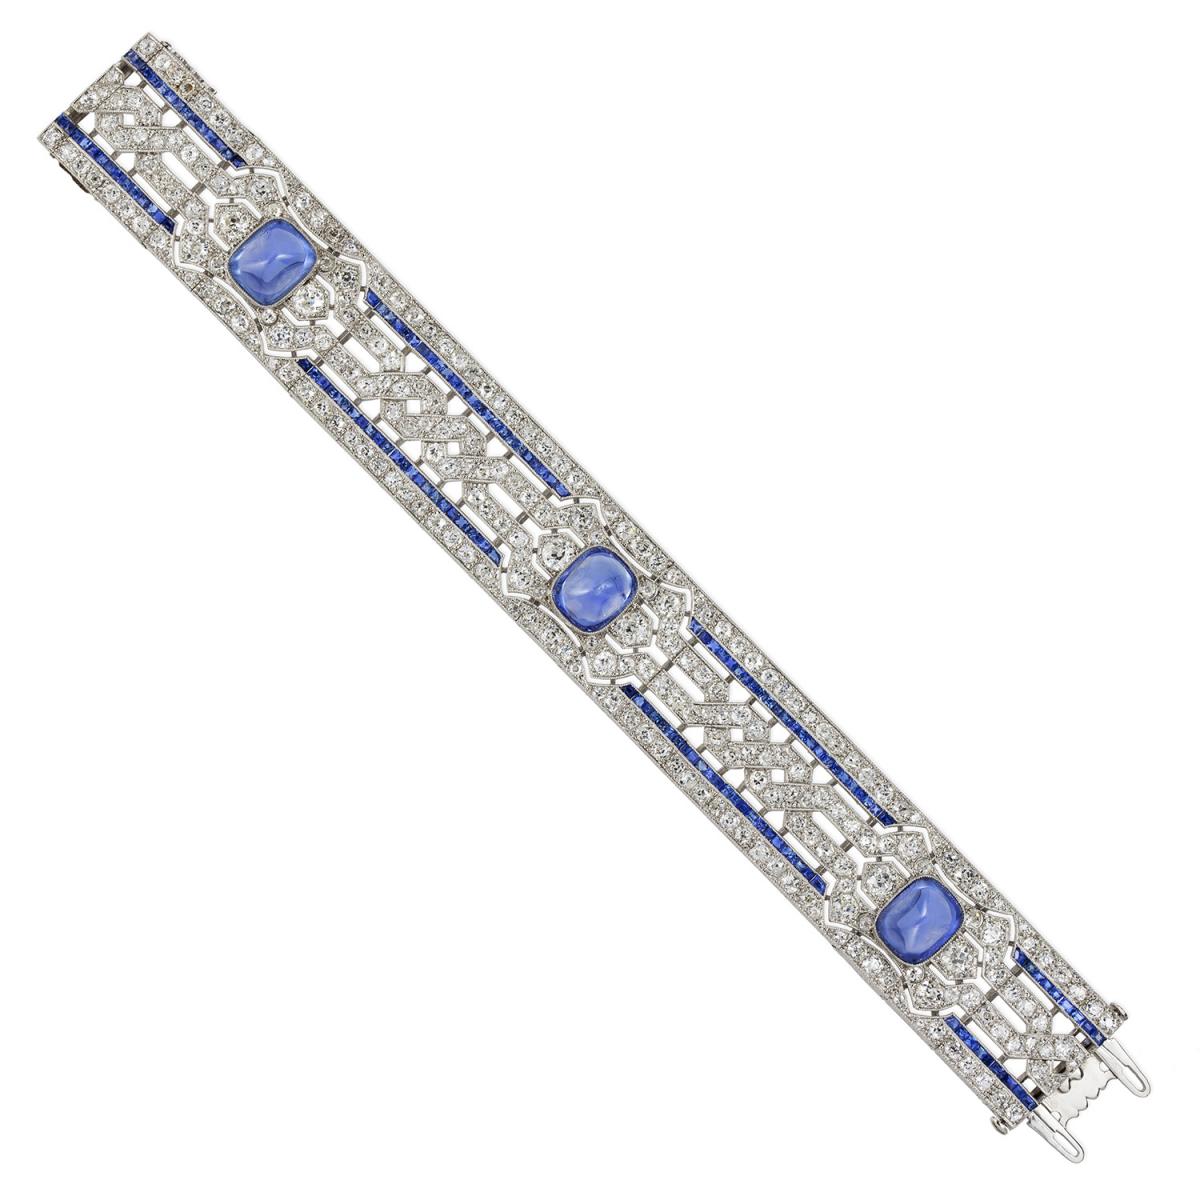 An Important Art Deco Sapphire and Diamond Bracelet, Circa 1920